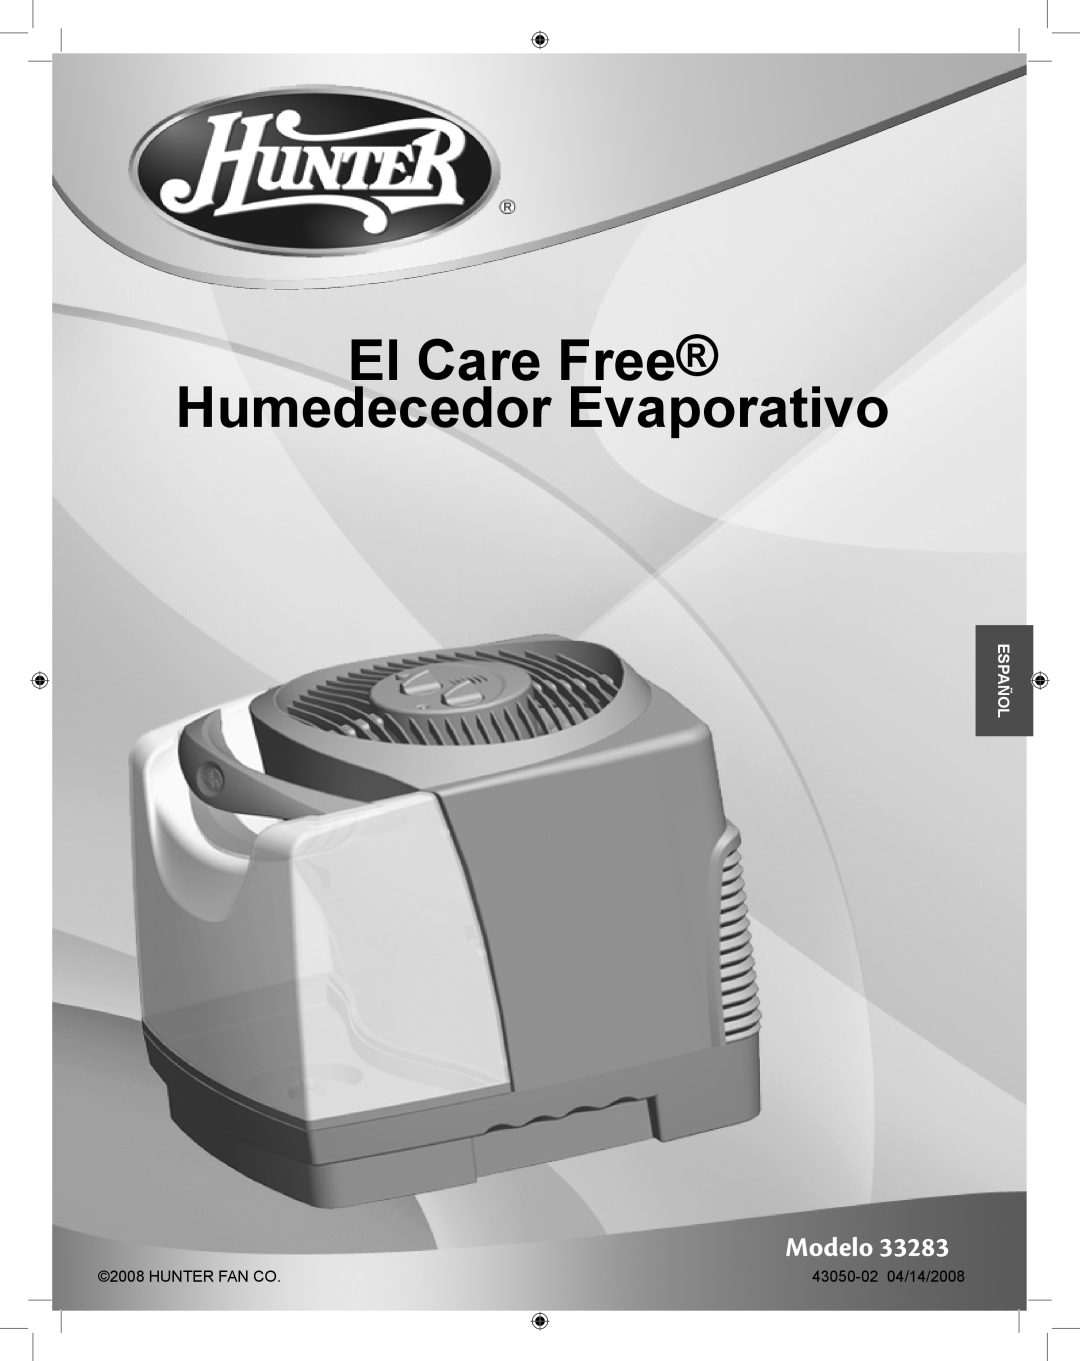 Hunter Fan 33283 manual El Care Free Humedecedor Evaporativo, Modelo, Español, Spanish 